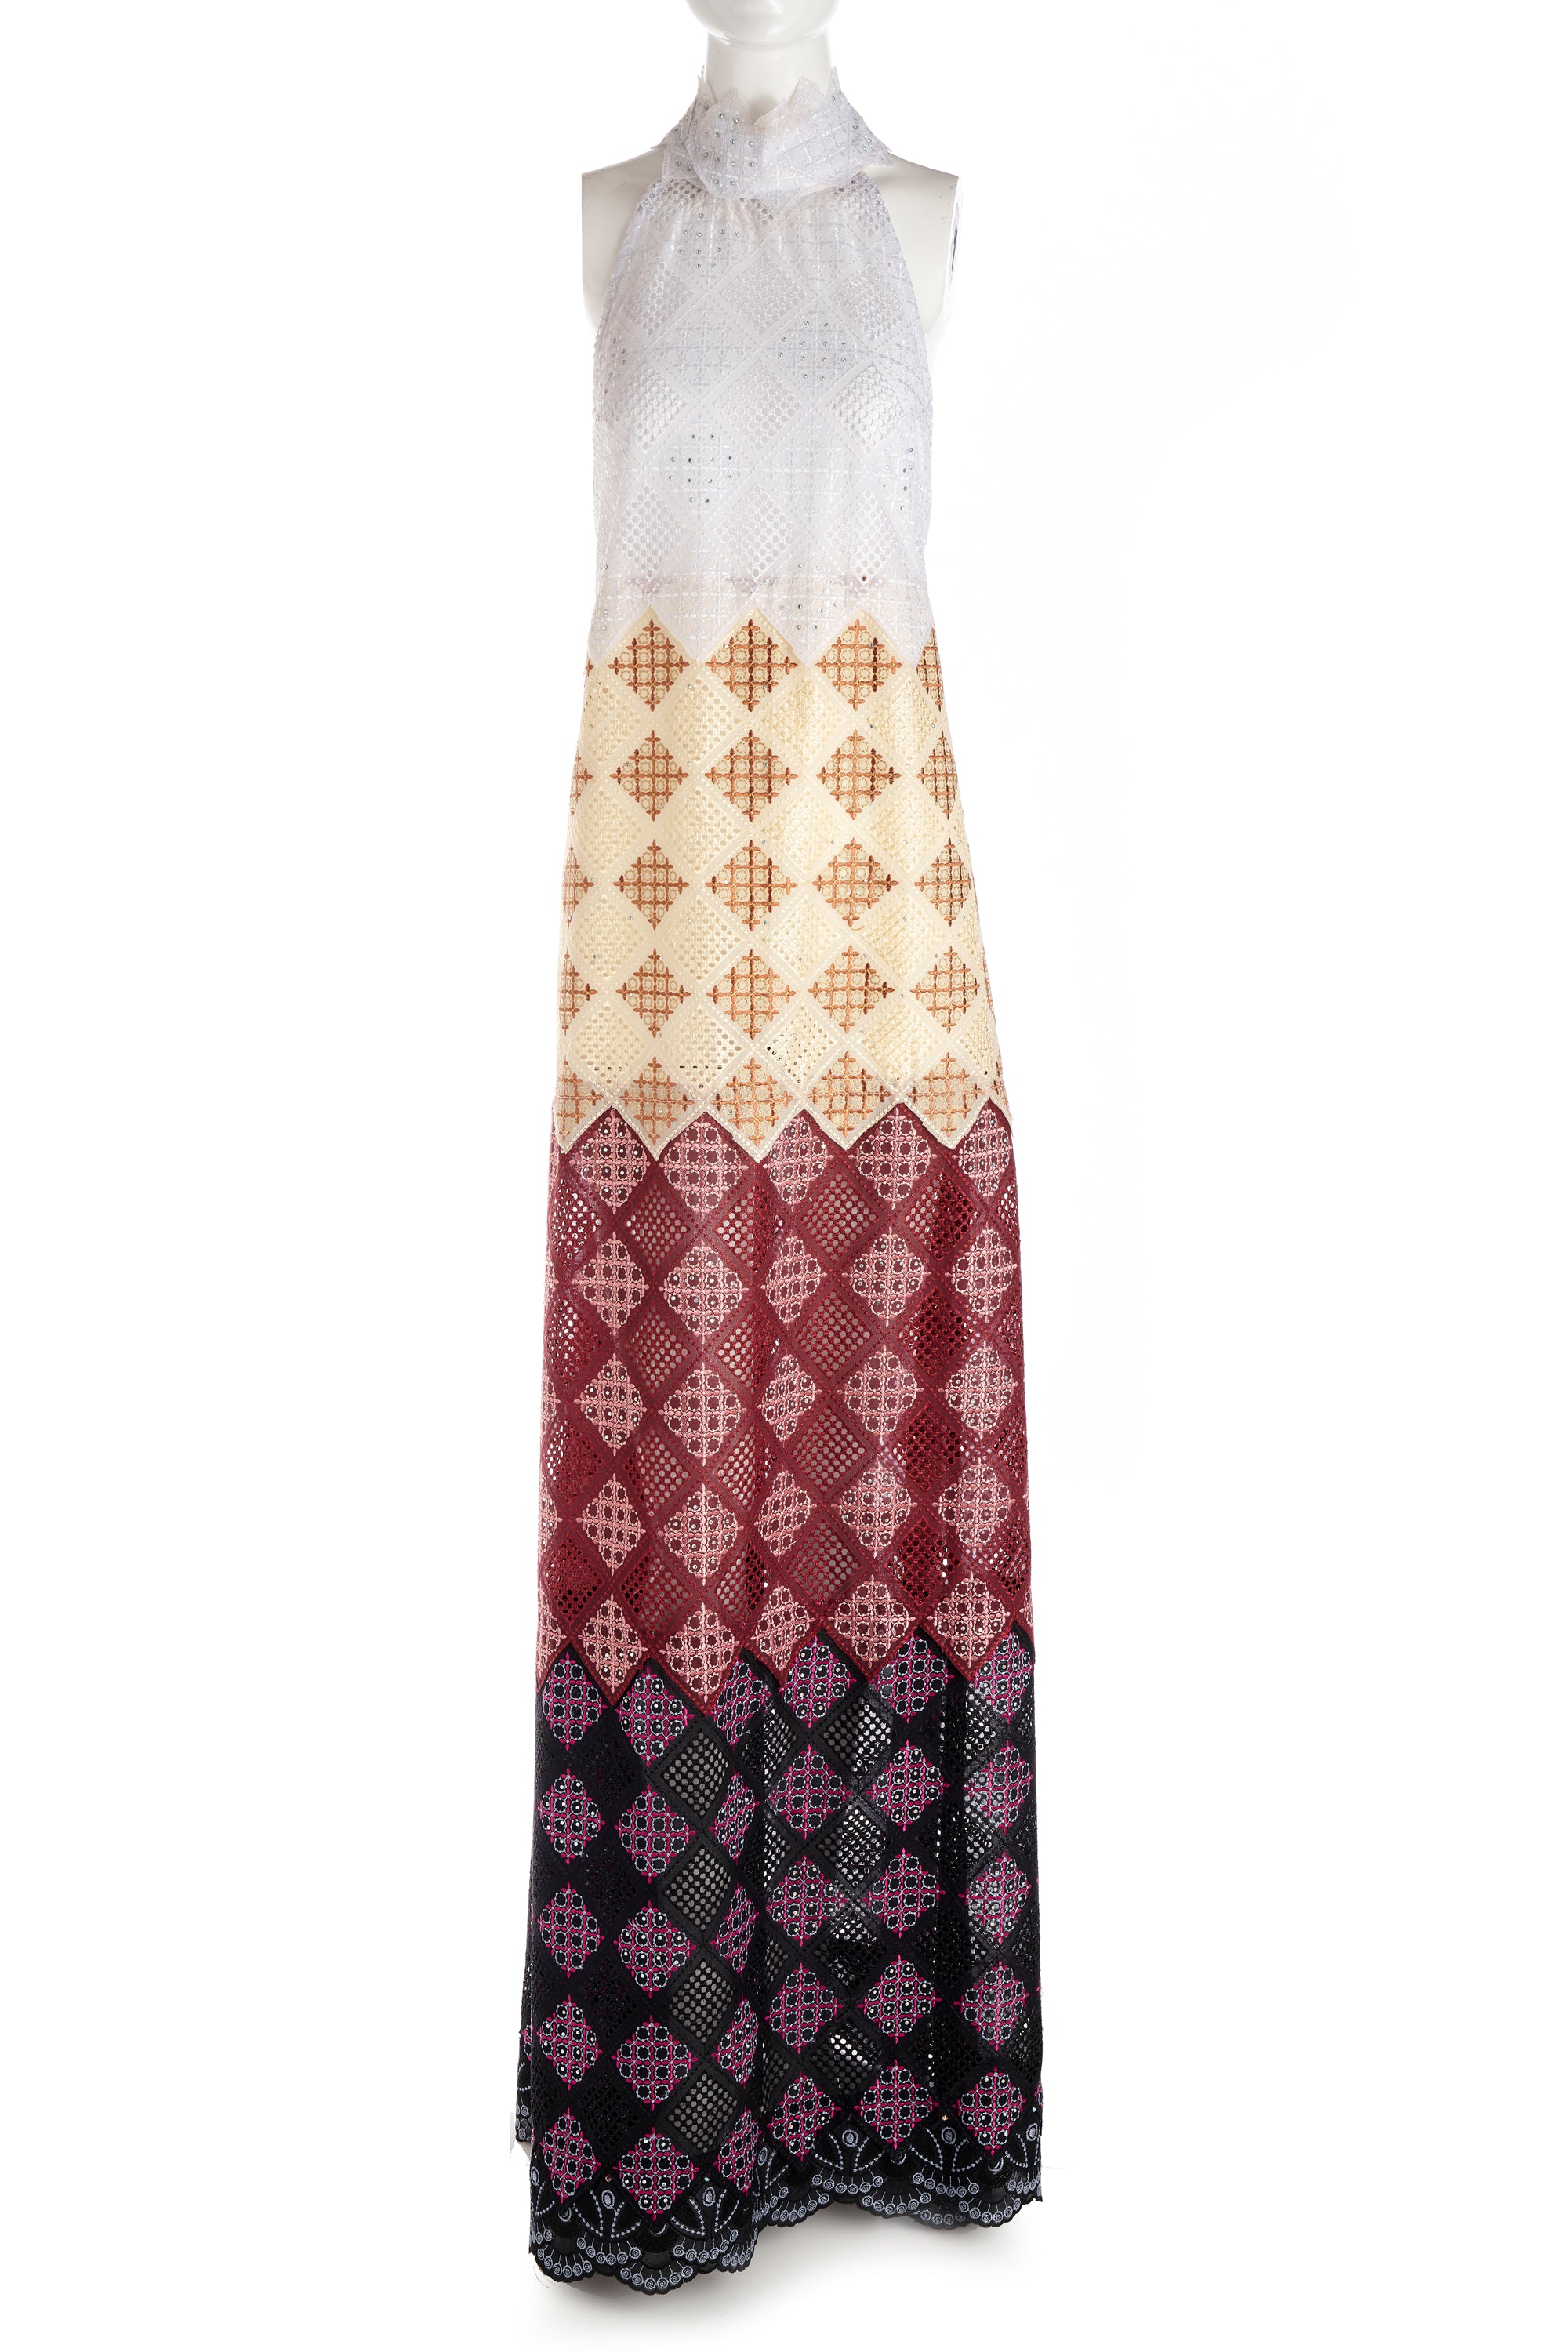 Lisa Folawiyo "Vintage" Lace Maxi Dress NWT Sz 10